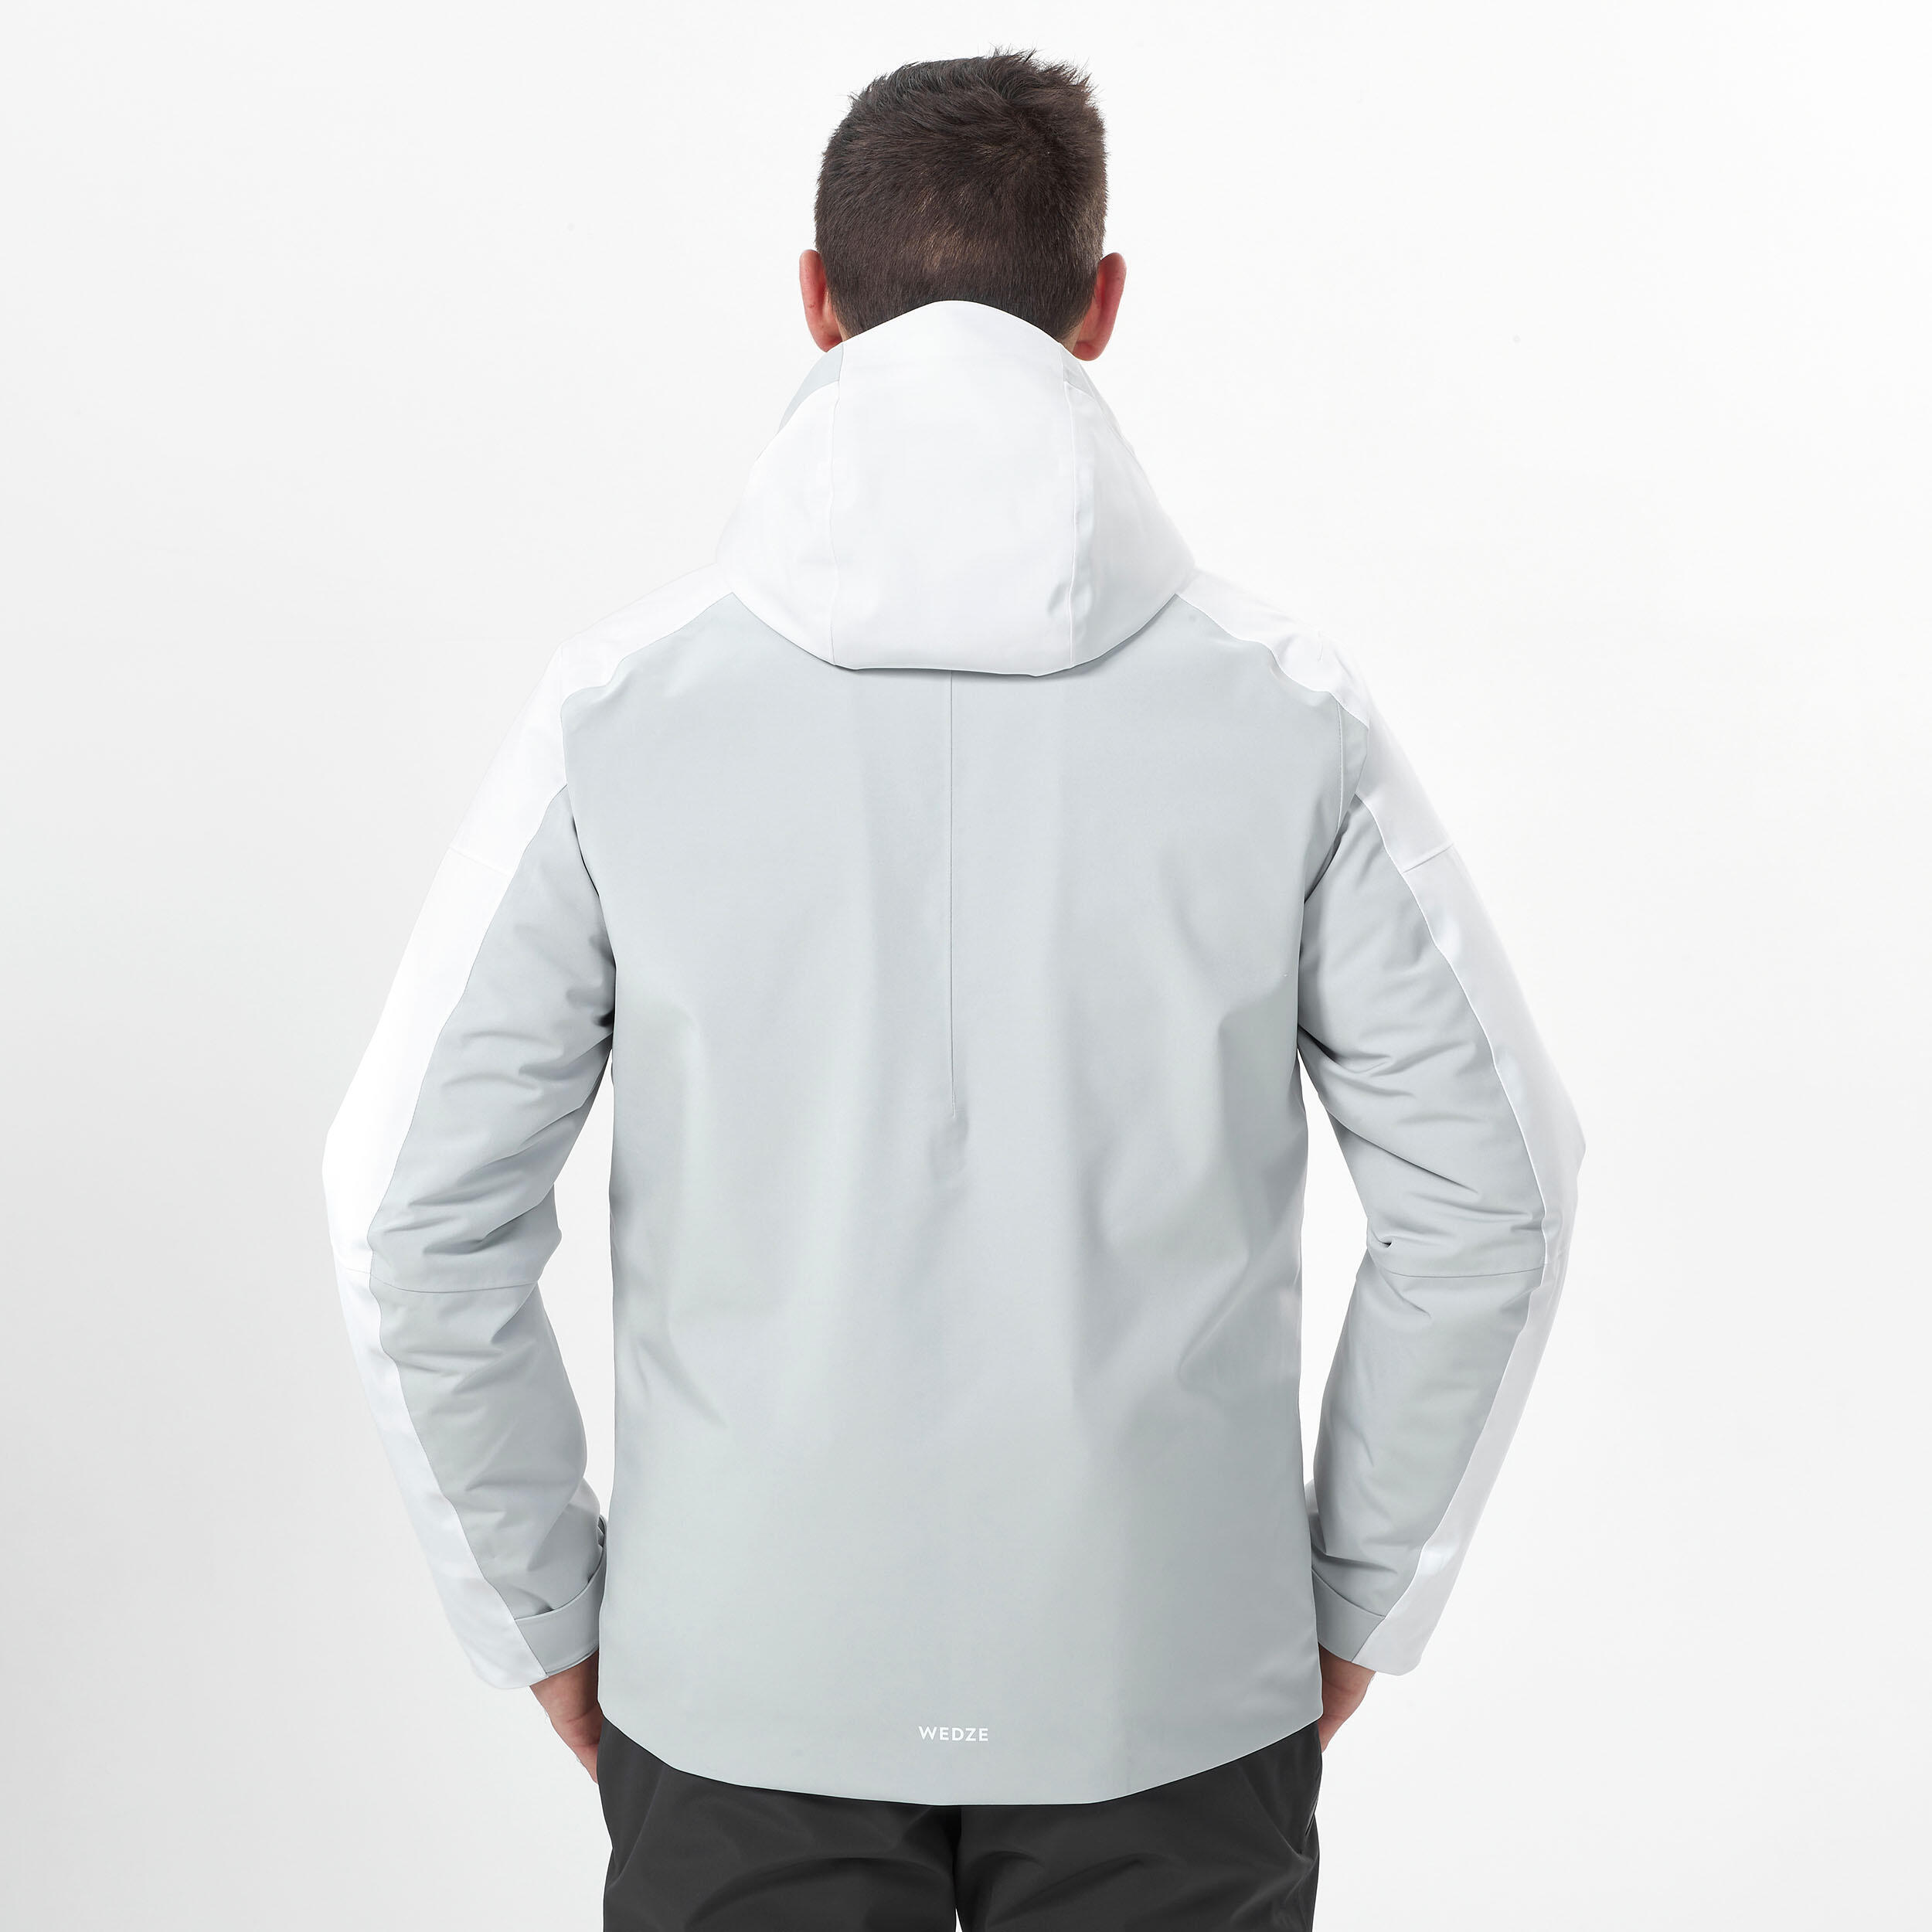 Men’s Warm Ski Jacket 500 - Grey/White 6/10